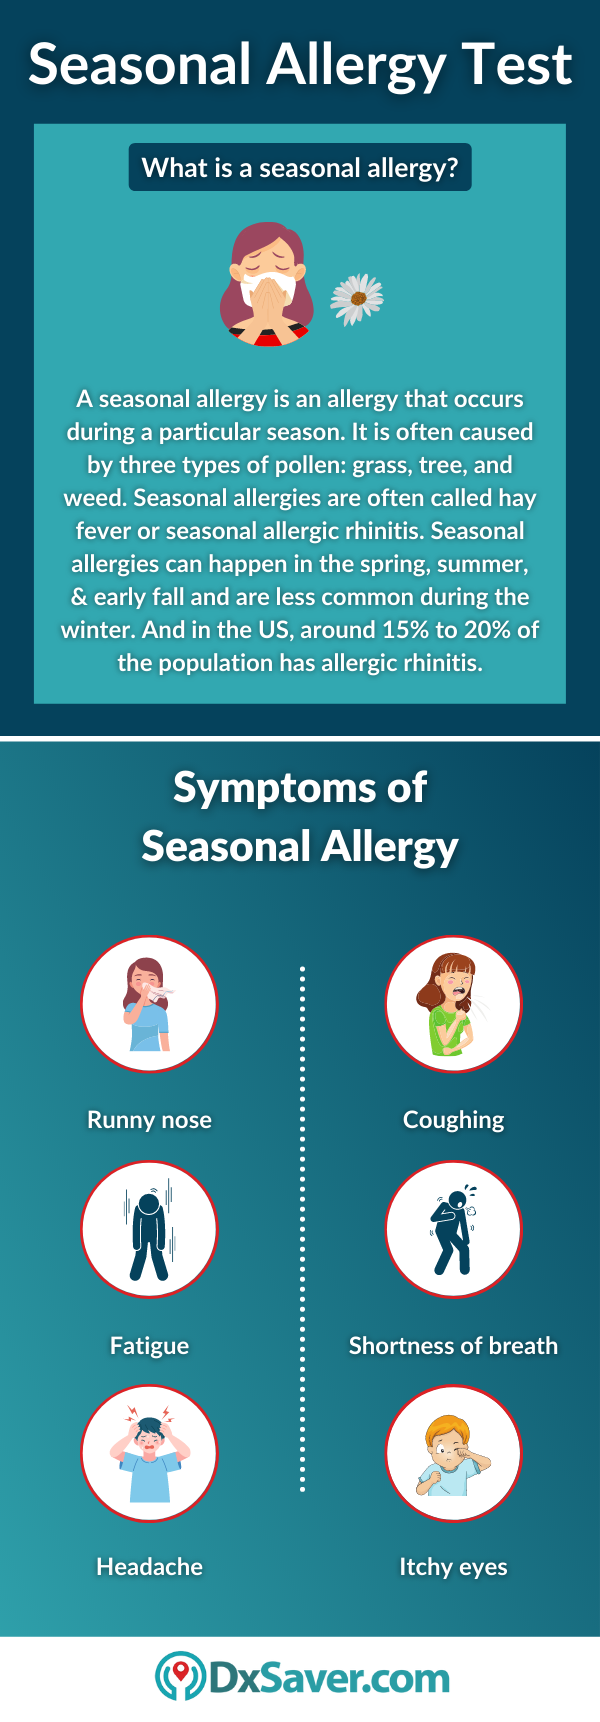 Seasonal Allergy and its Symptoms